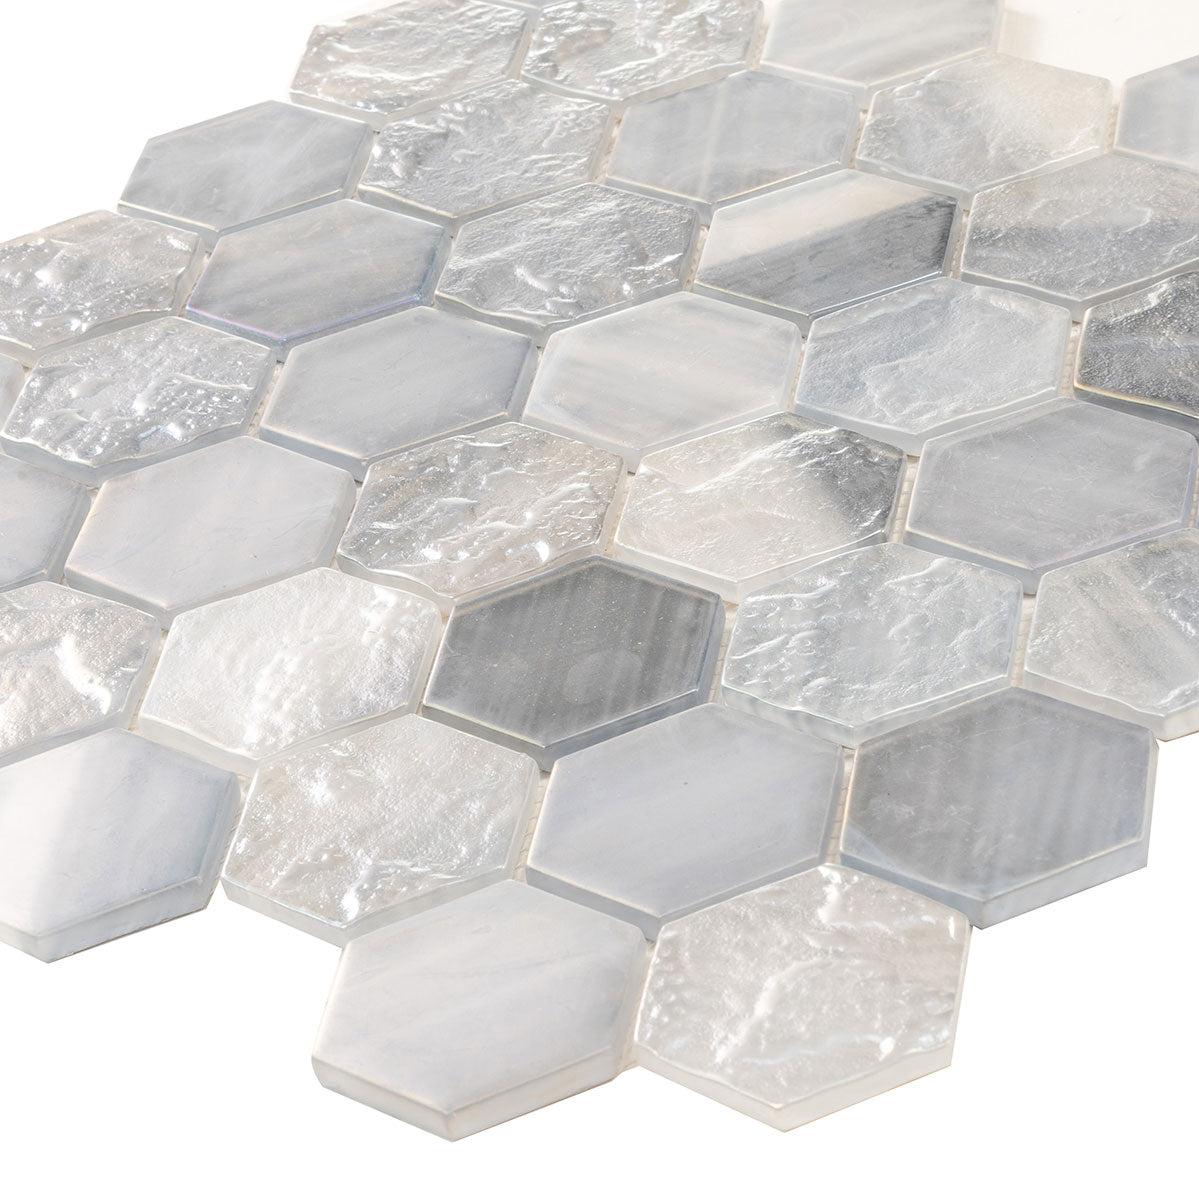 Champagne Dreams Hexagon Glass Mosaic Tile